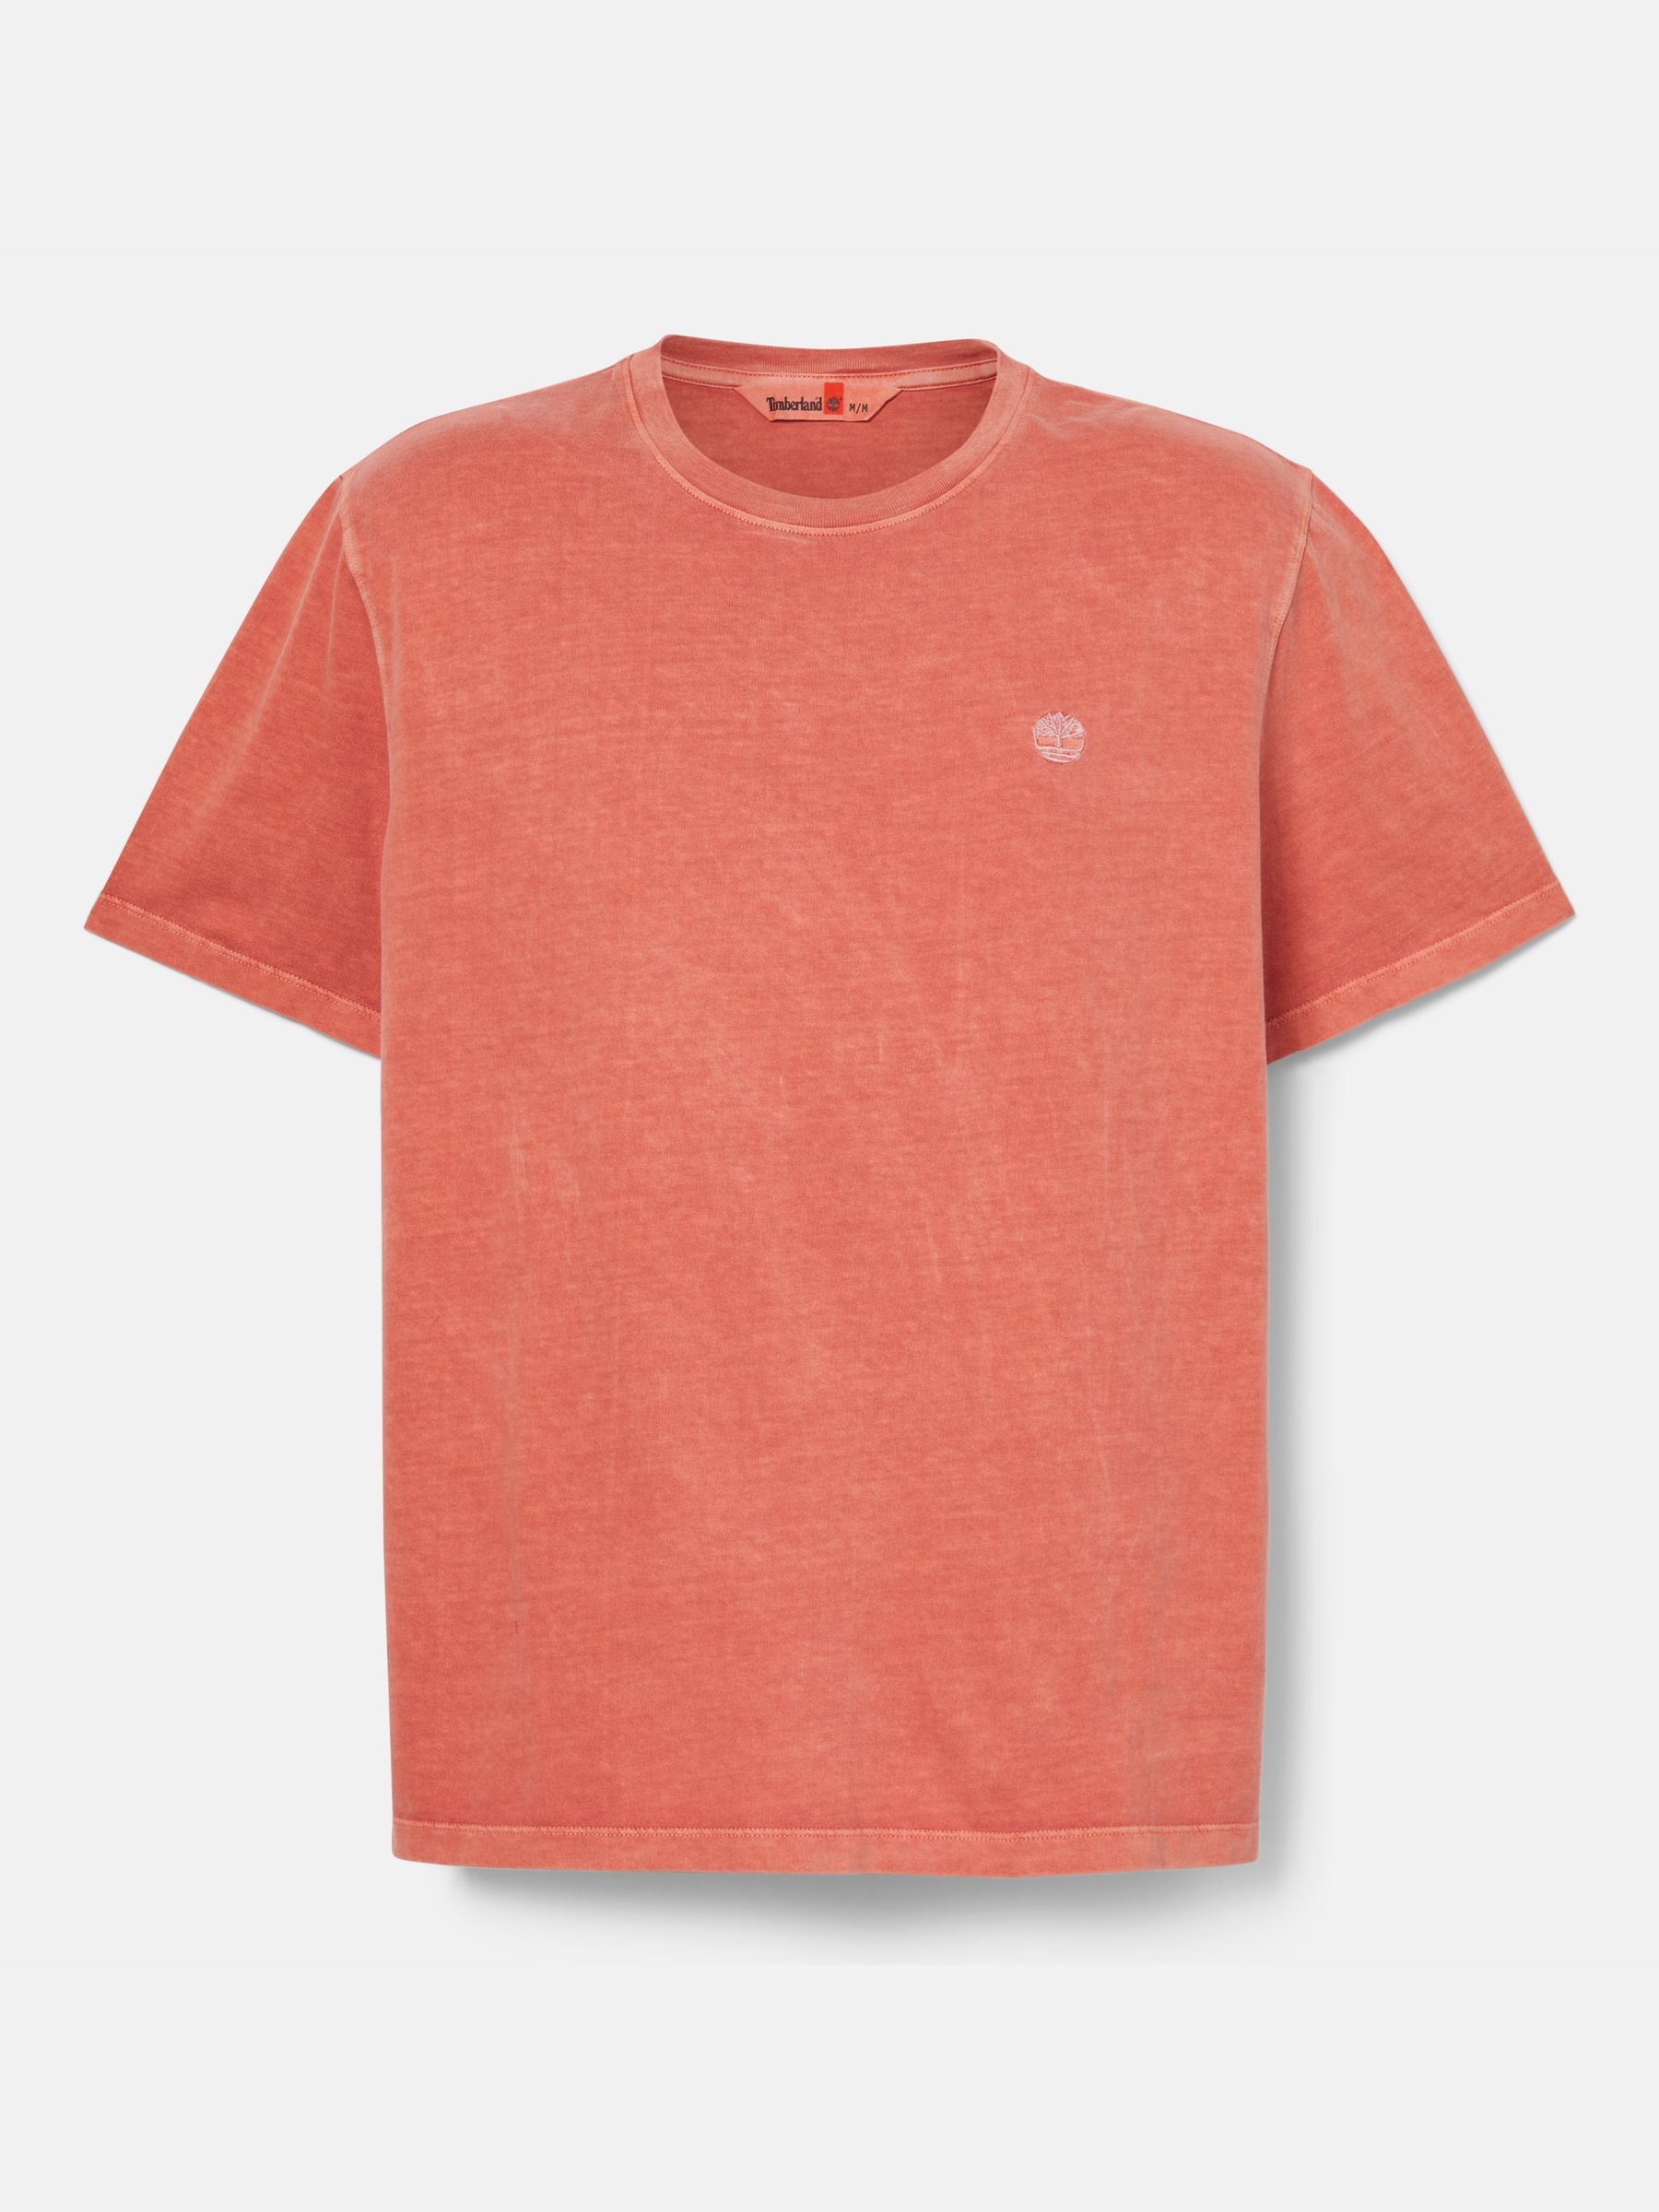 Timberland Dye Short Sleeve T-Shirt, Burnt Sienna, S